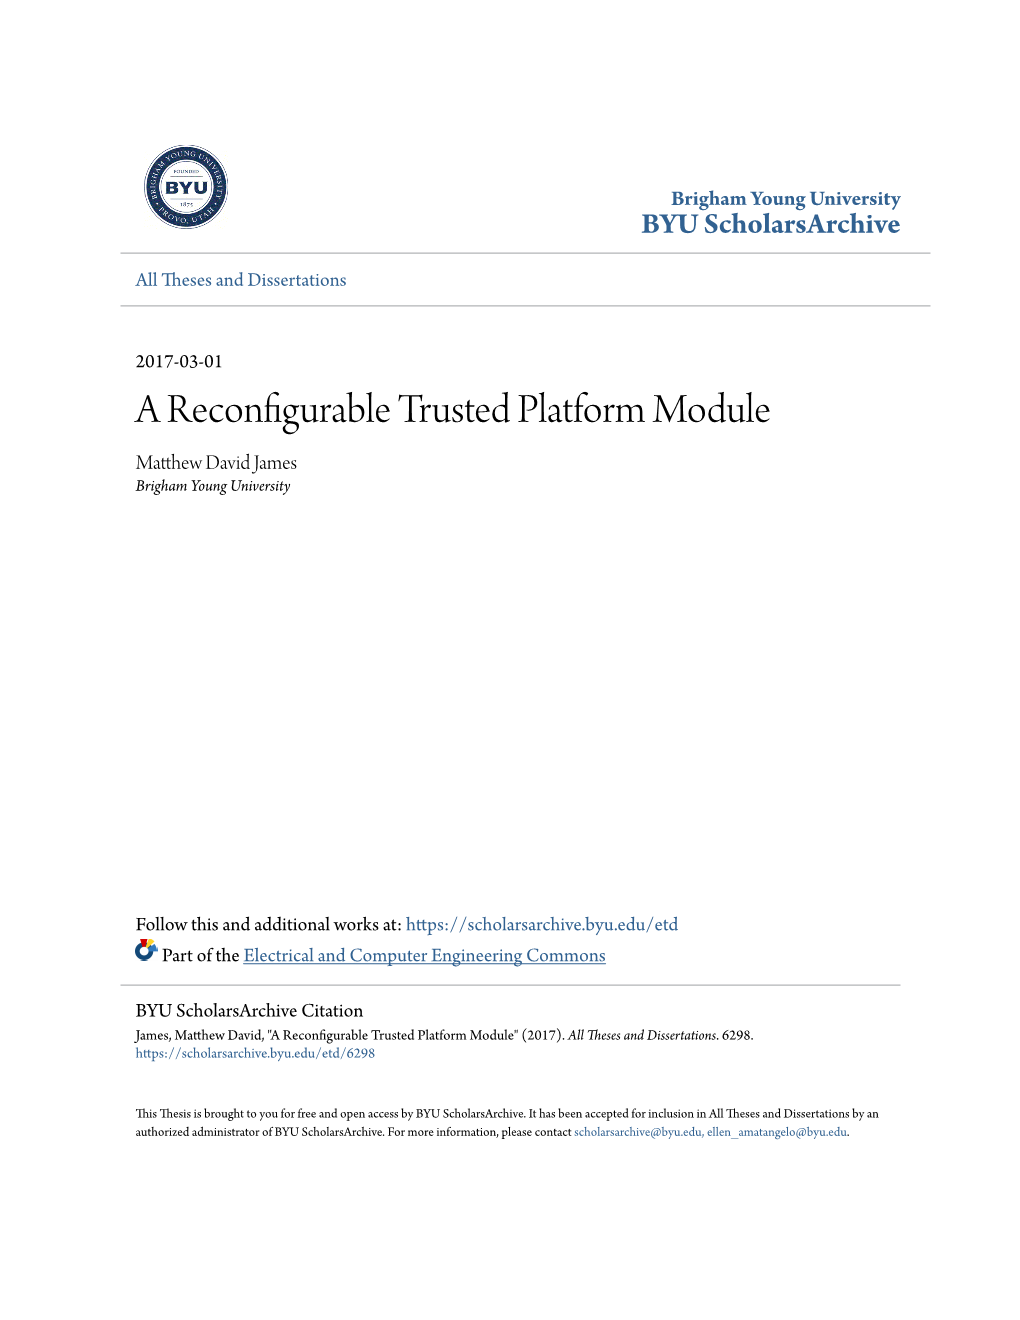 A Reconfigurable Trusted Platform Module Matthew Ad Vid James Brigham Young University